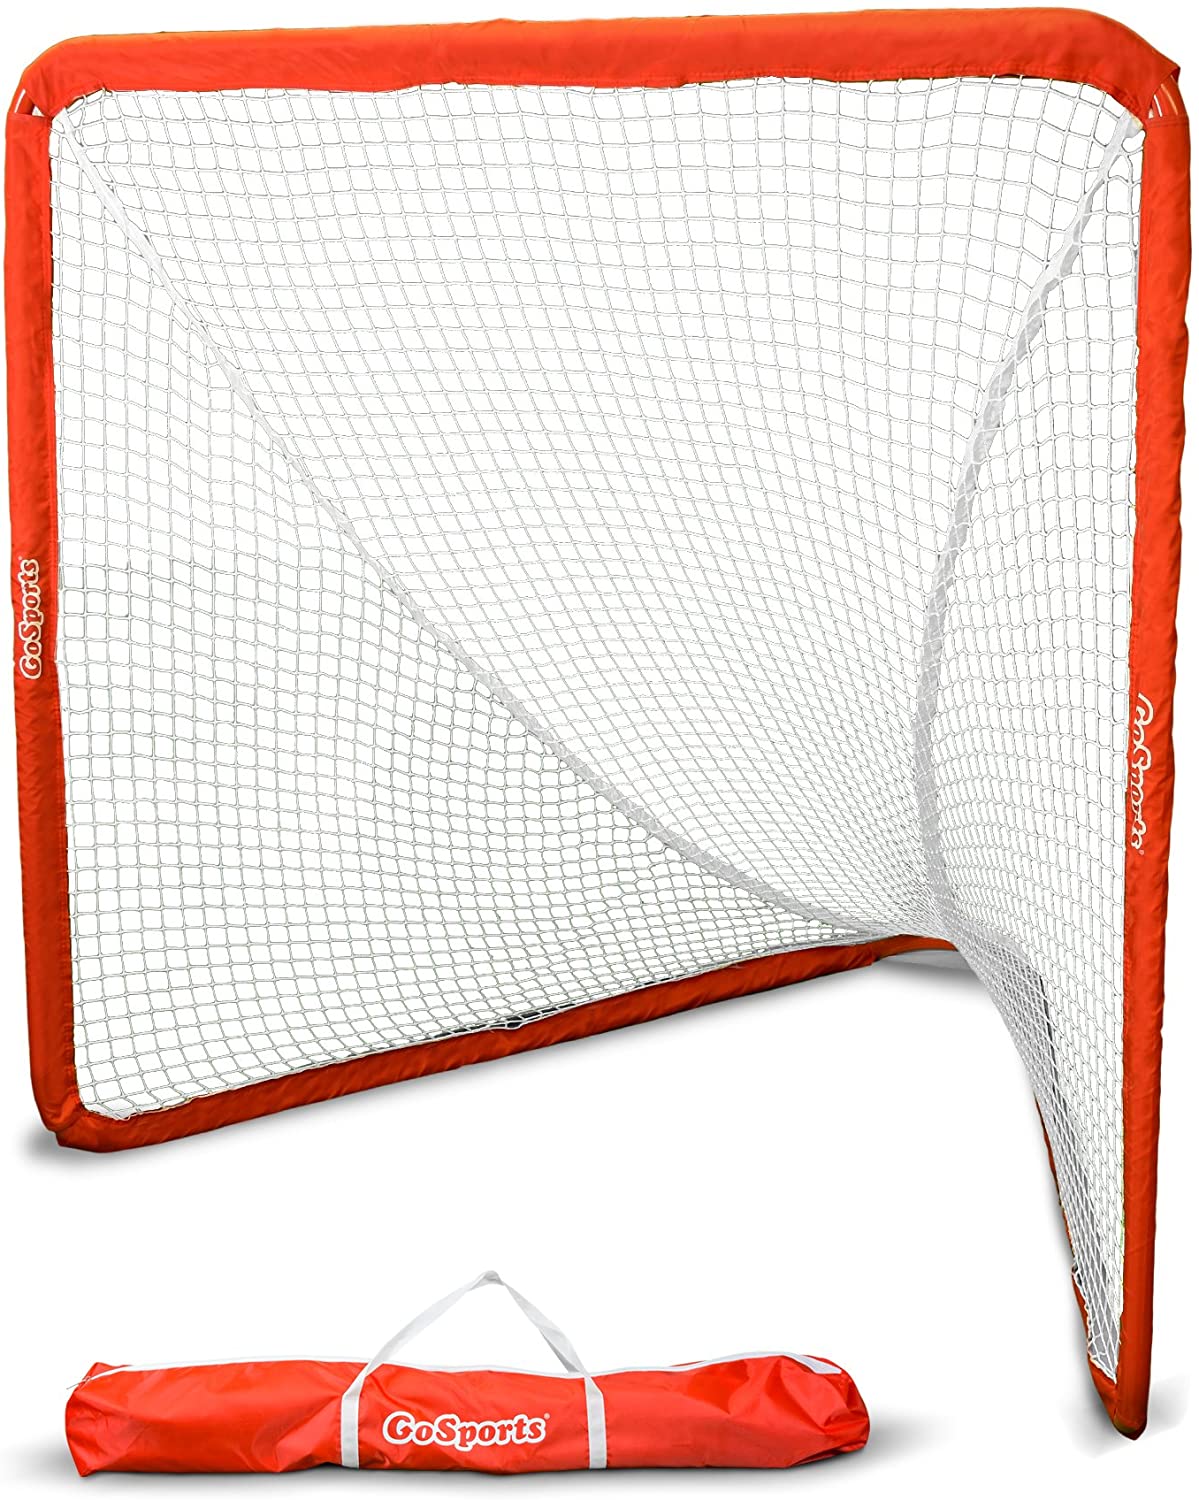 GoSports Regulation Easy Setup Lacrosse Net, 6-Foot